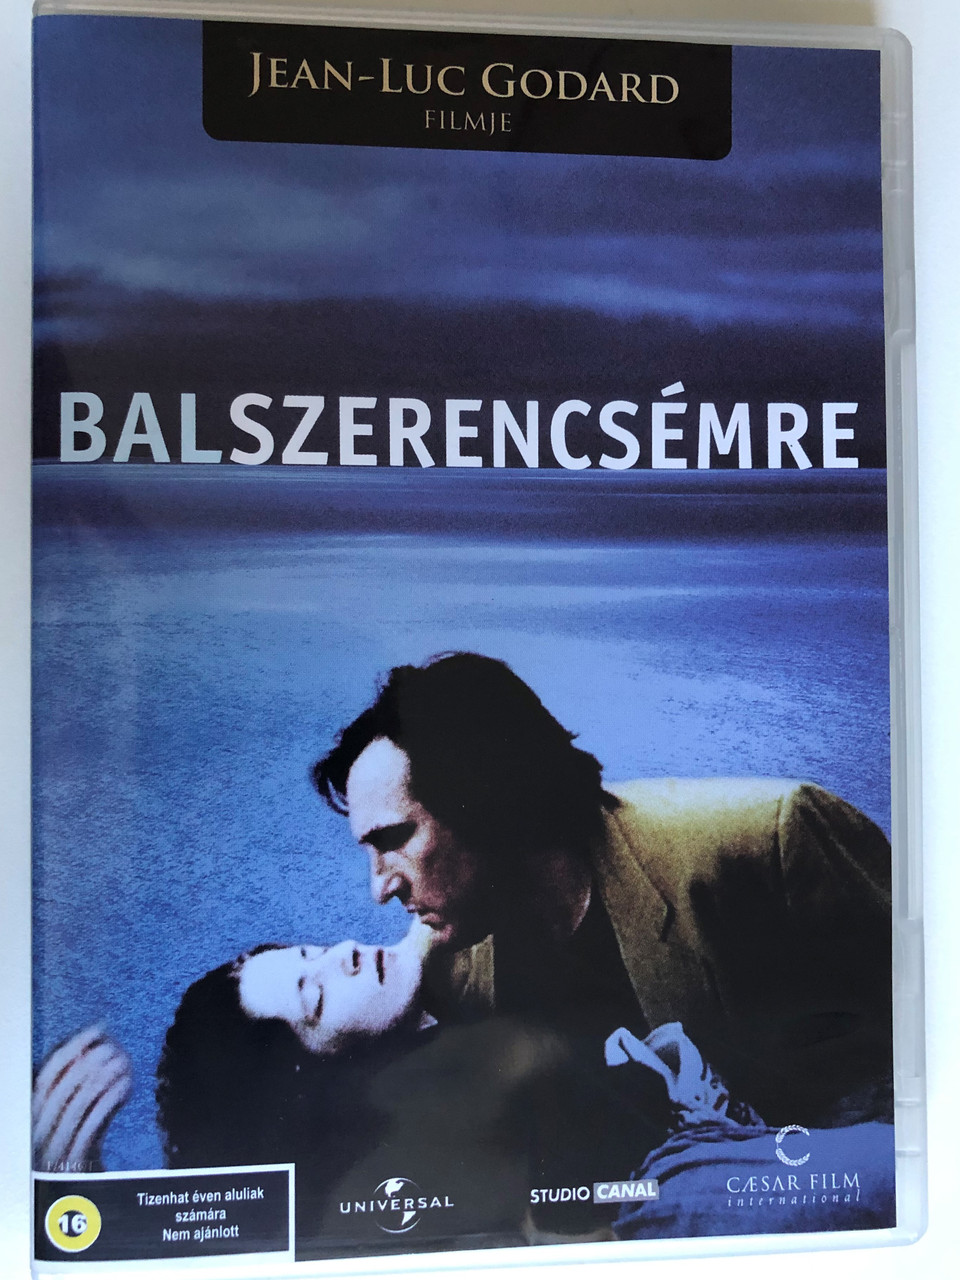 Hélas pour moi DVD 1993 Balszerencsémre / Directed by Jean-Luc Godard /  Starring: Gérard Depardieu - bibleinmylanguage